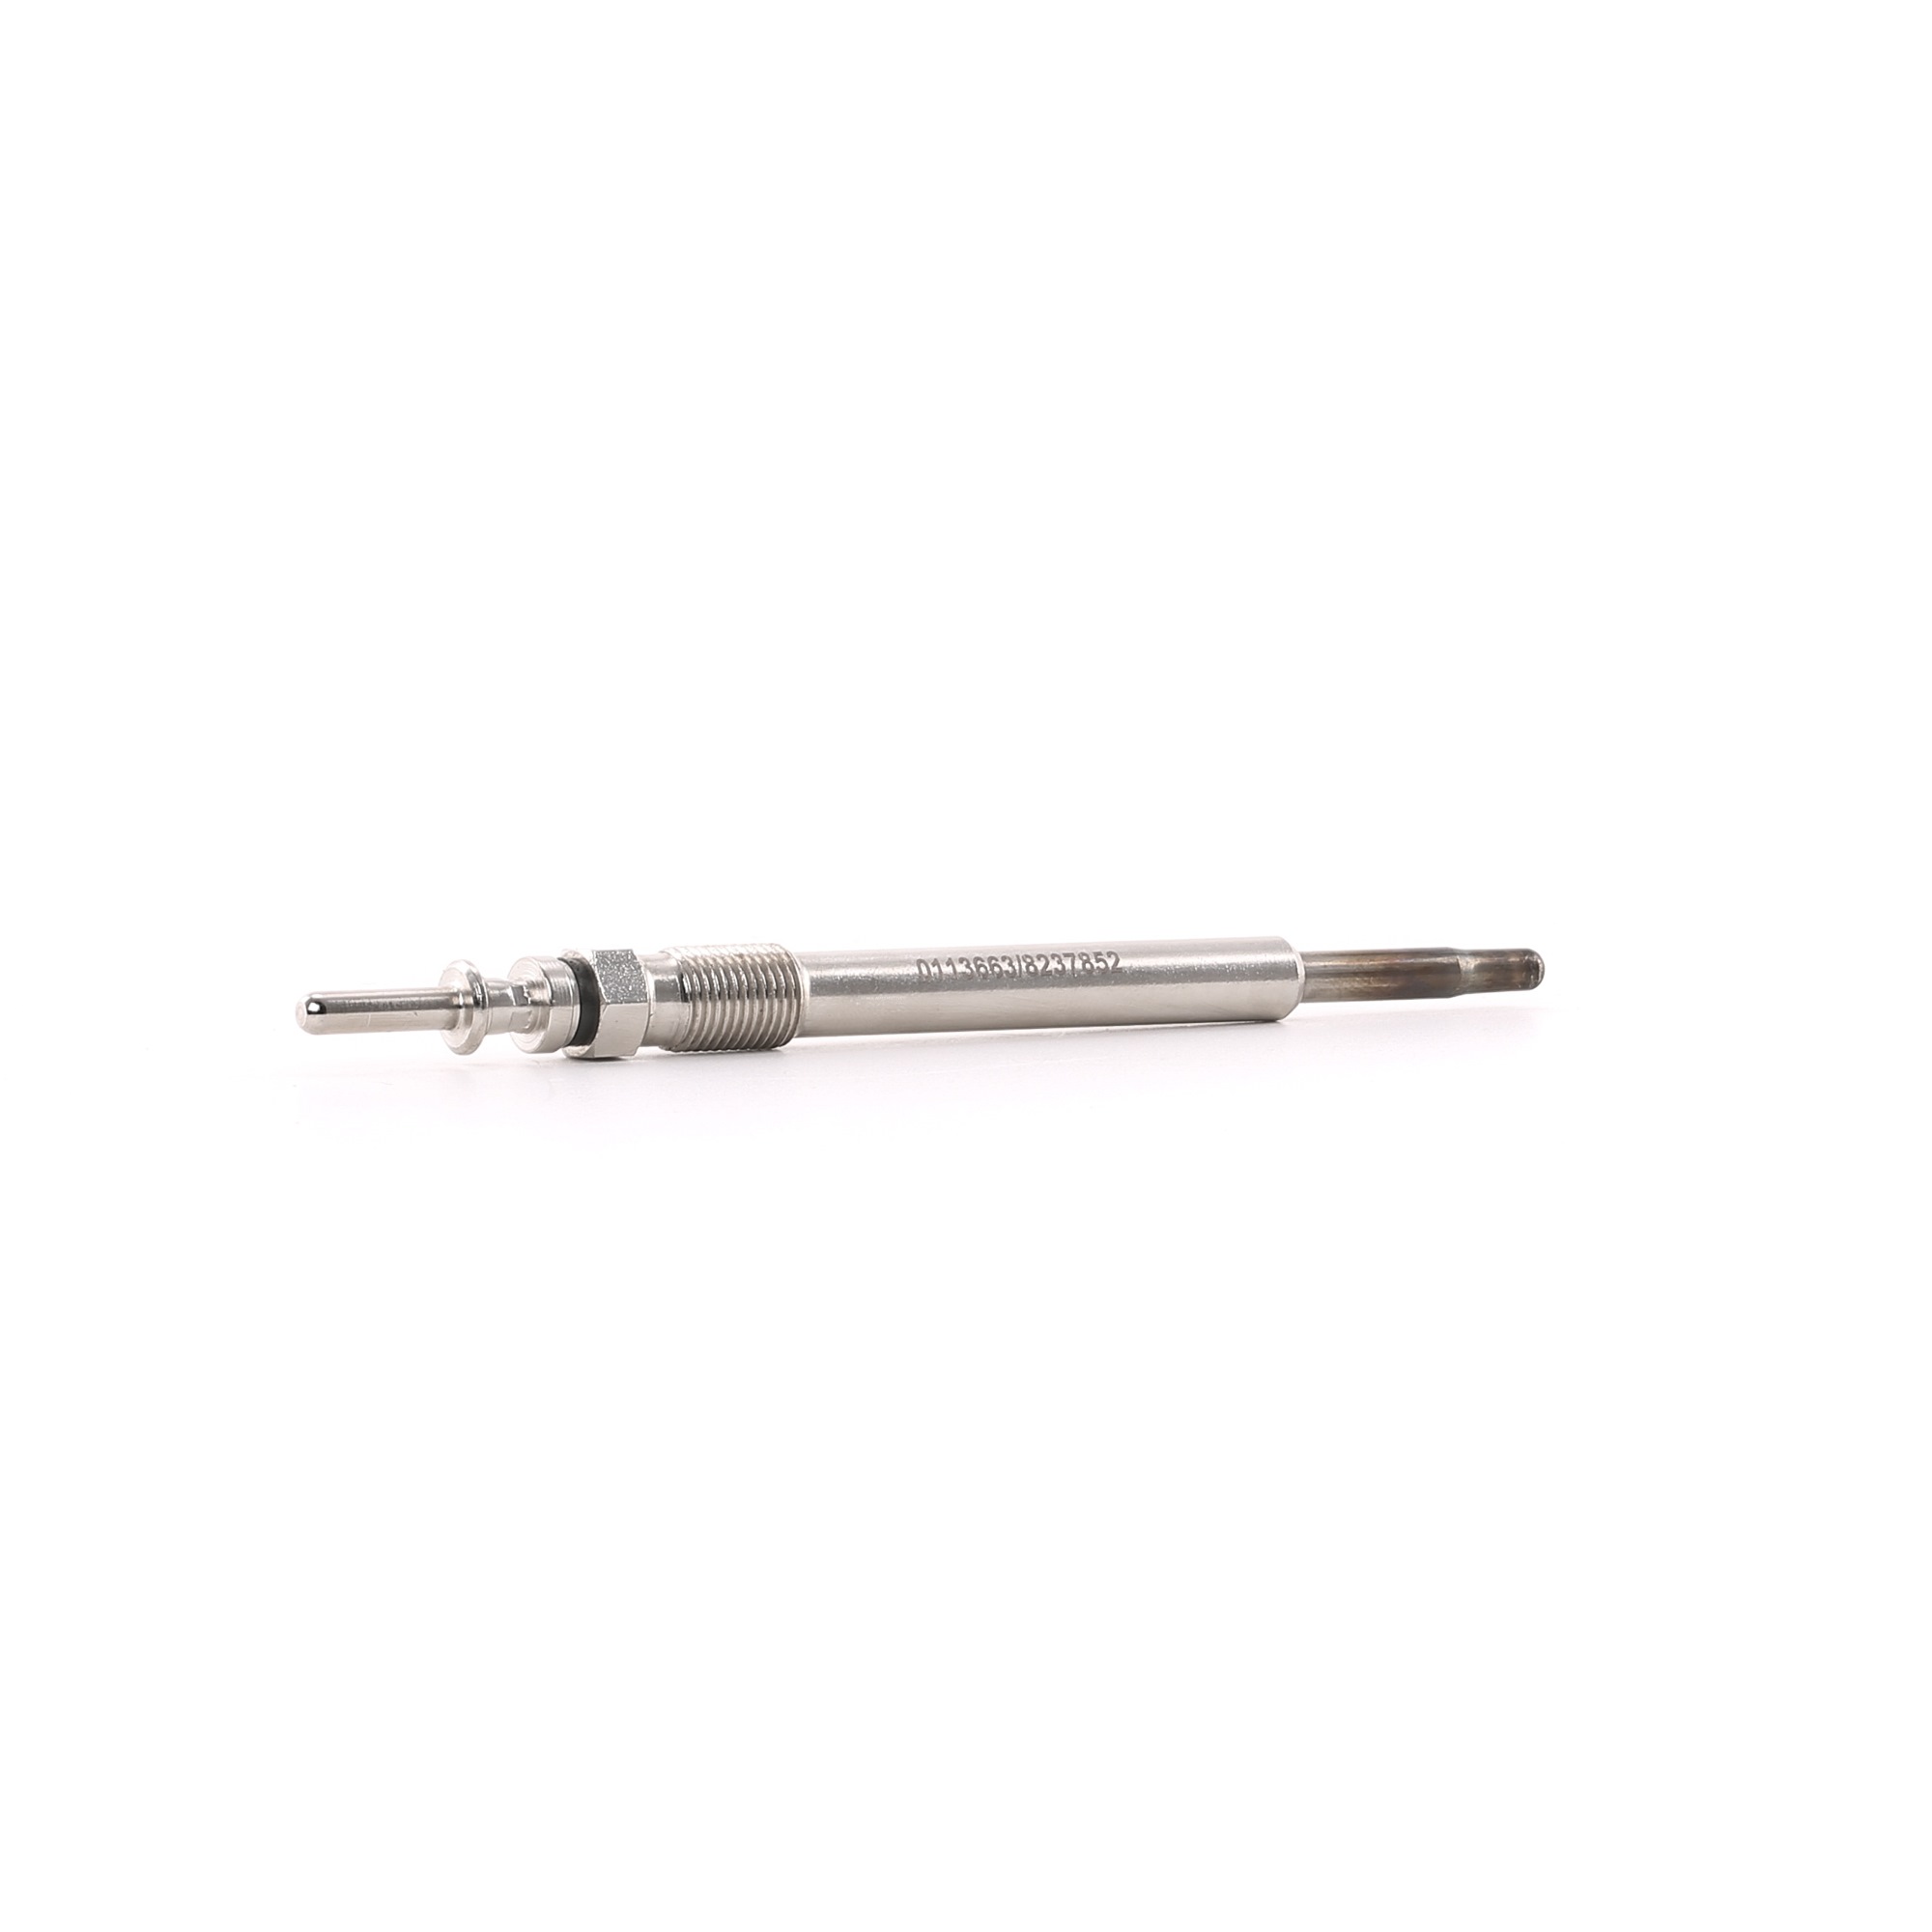 STARK SKGP-1890146 Glow plug 11V M10x1, Pencil-type Glow Plug, 133 mm, 12 Nm